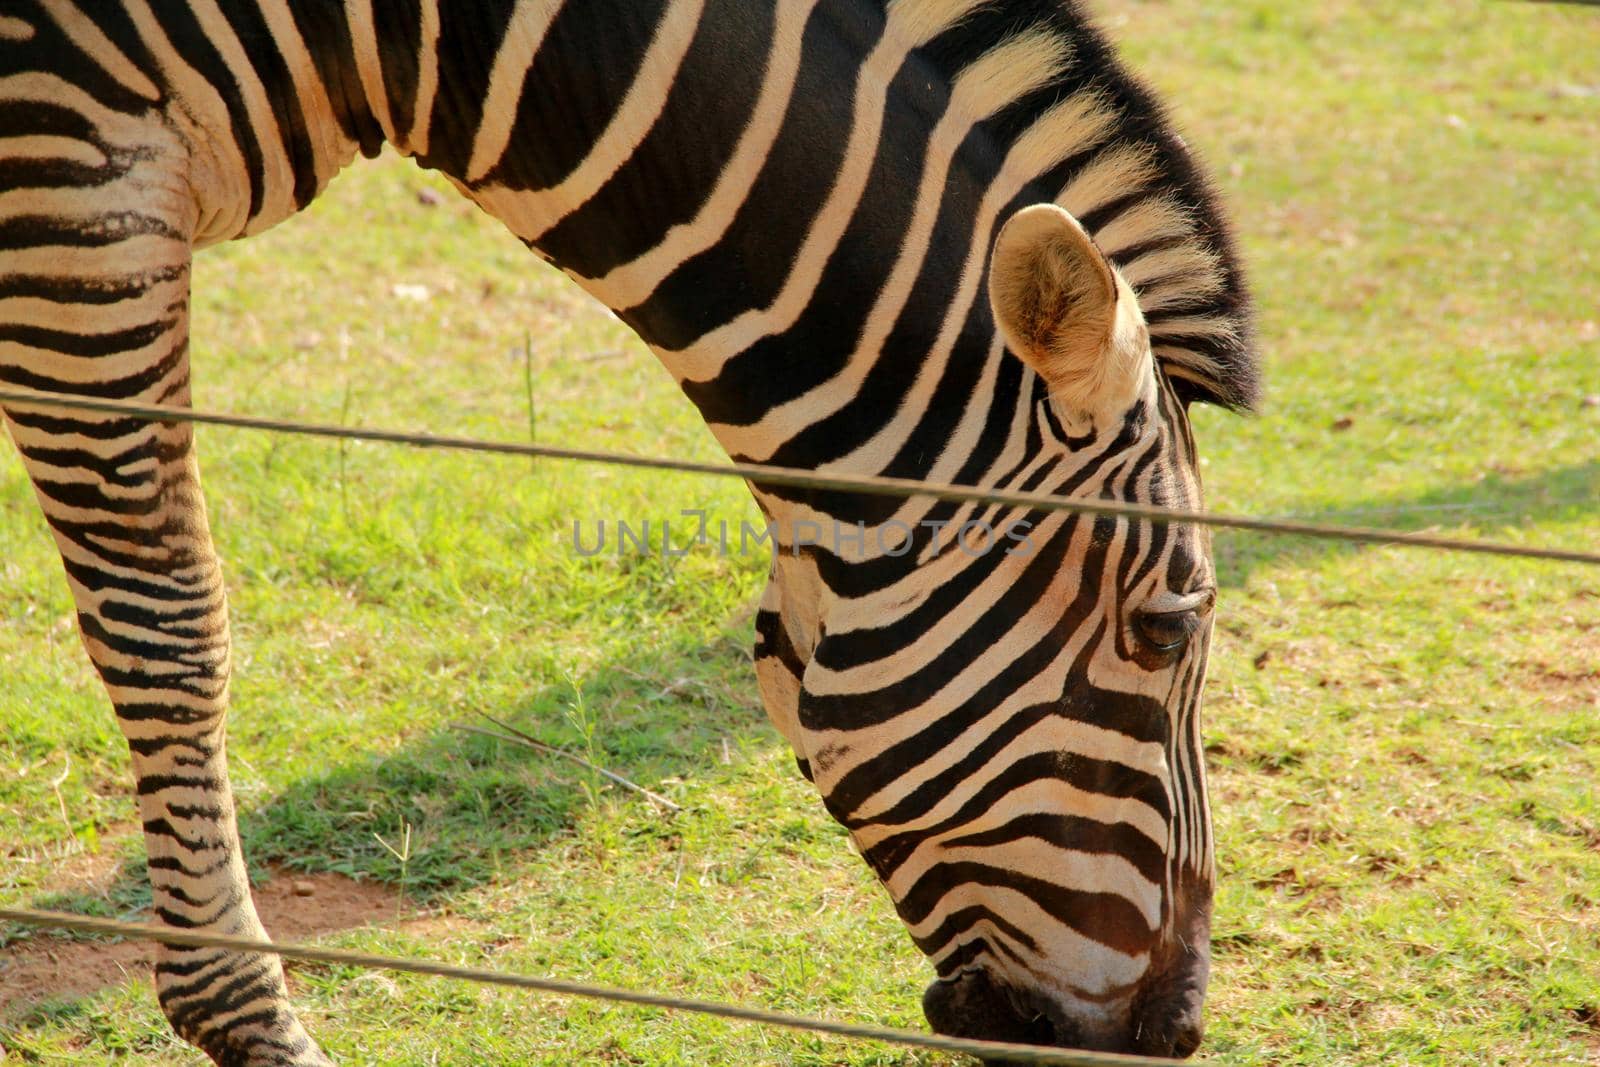 zebra in zoologico de salvador by joasouza